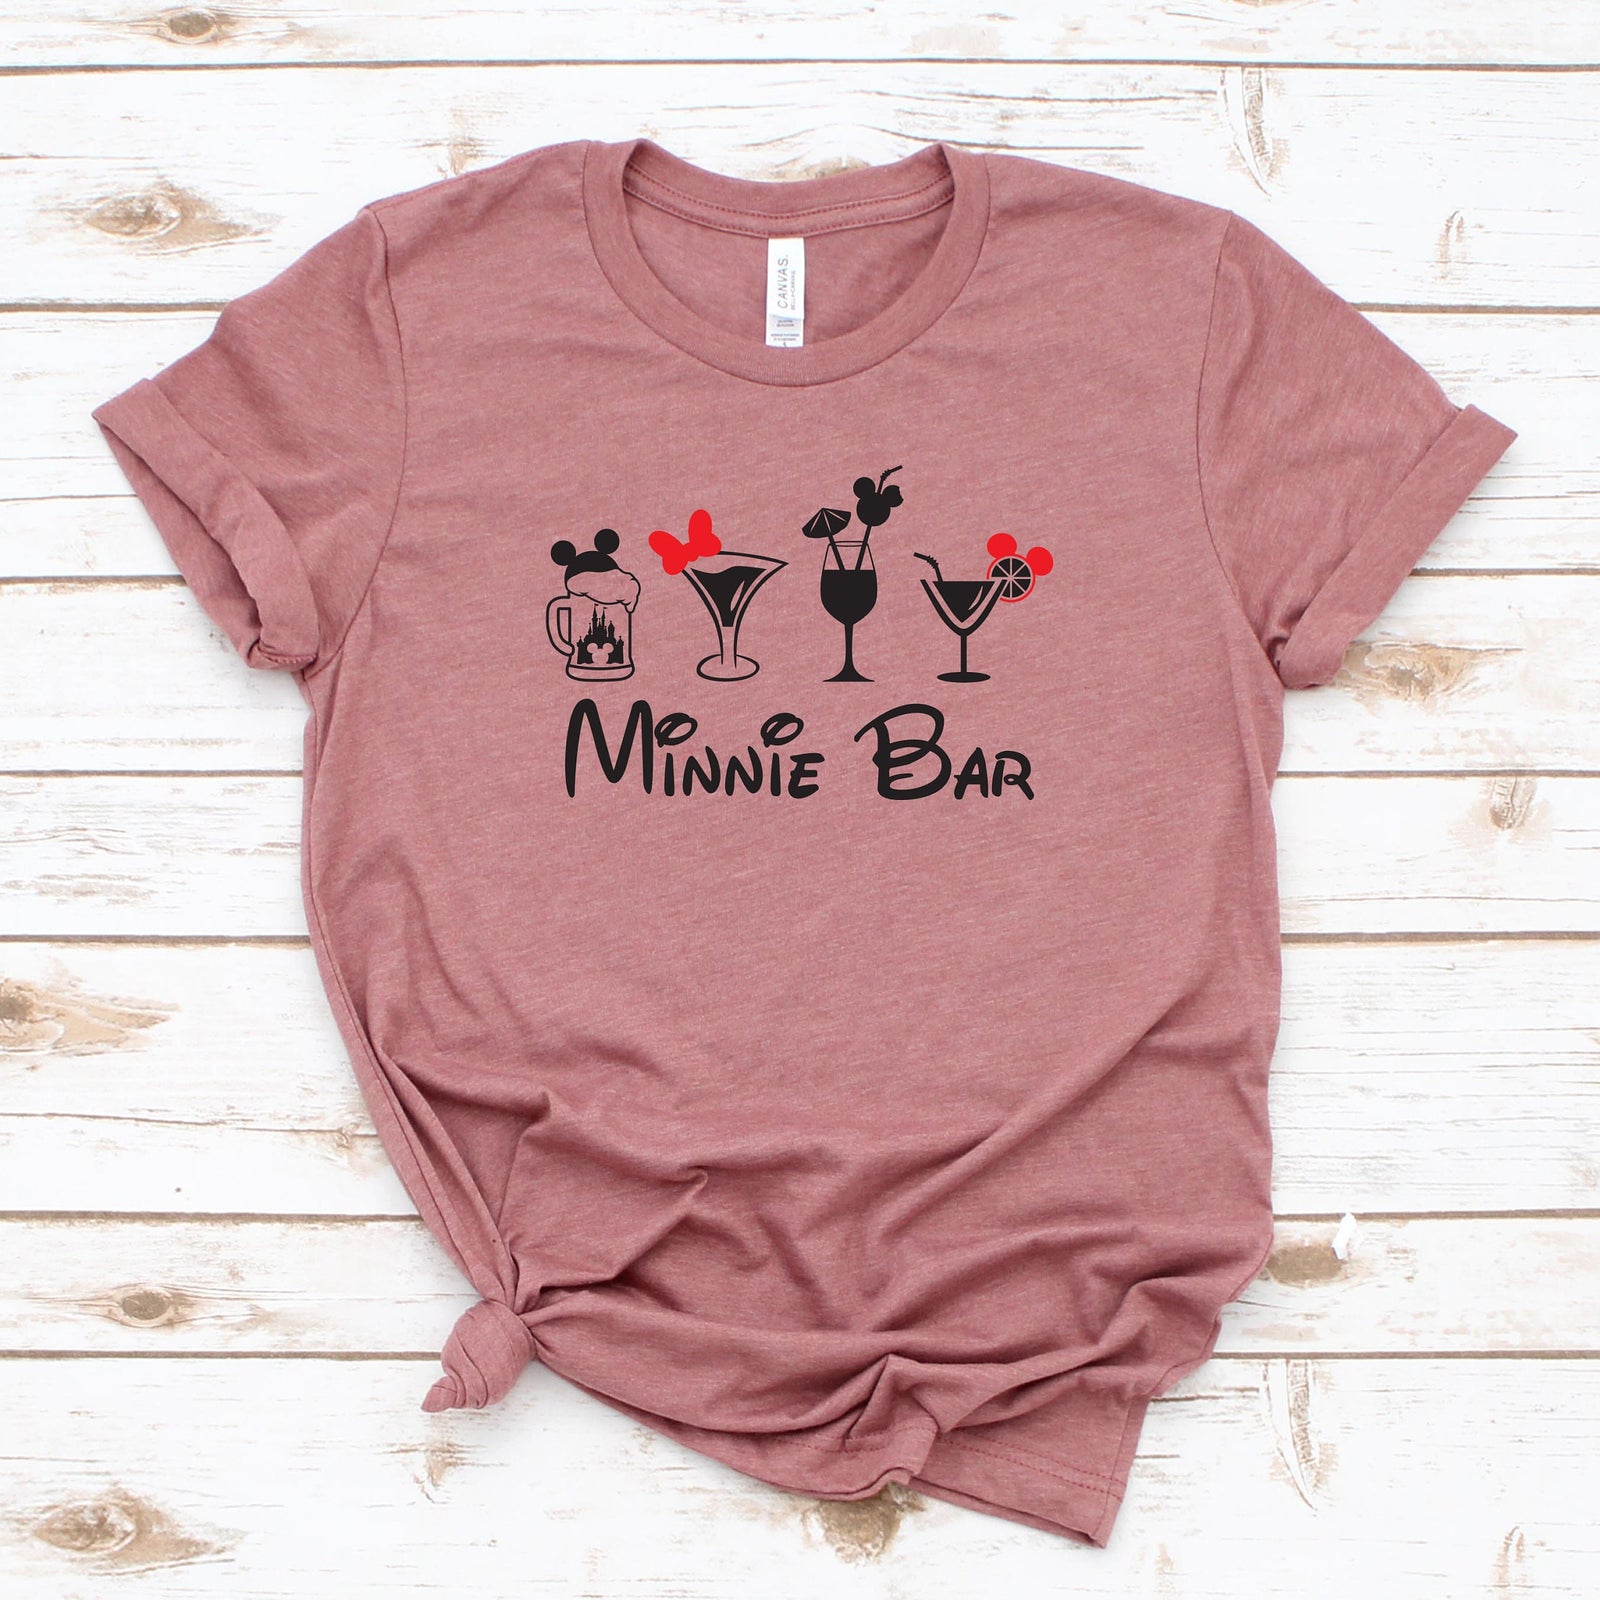 Minnie Bar t shirt - Drinking Shirt - Martini Drink Wine Glass - Disney - Epcot Food and Wine